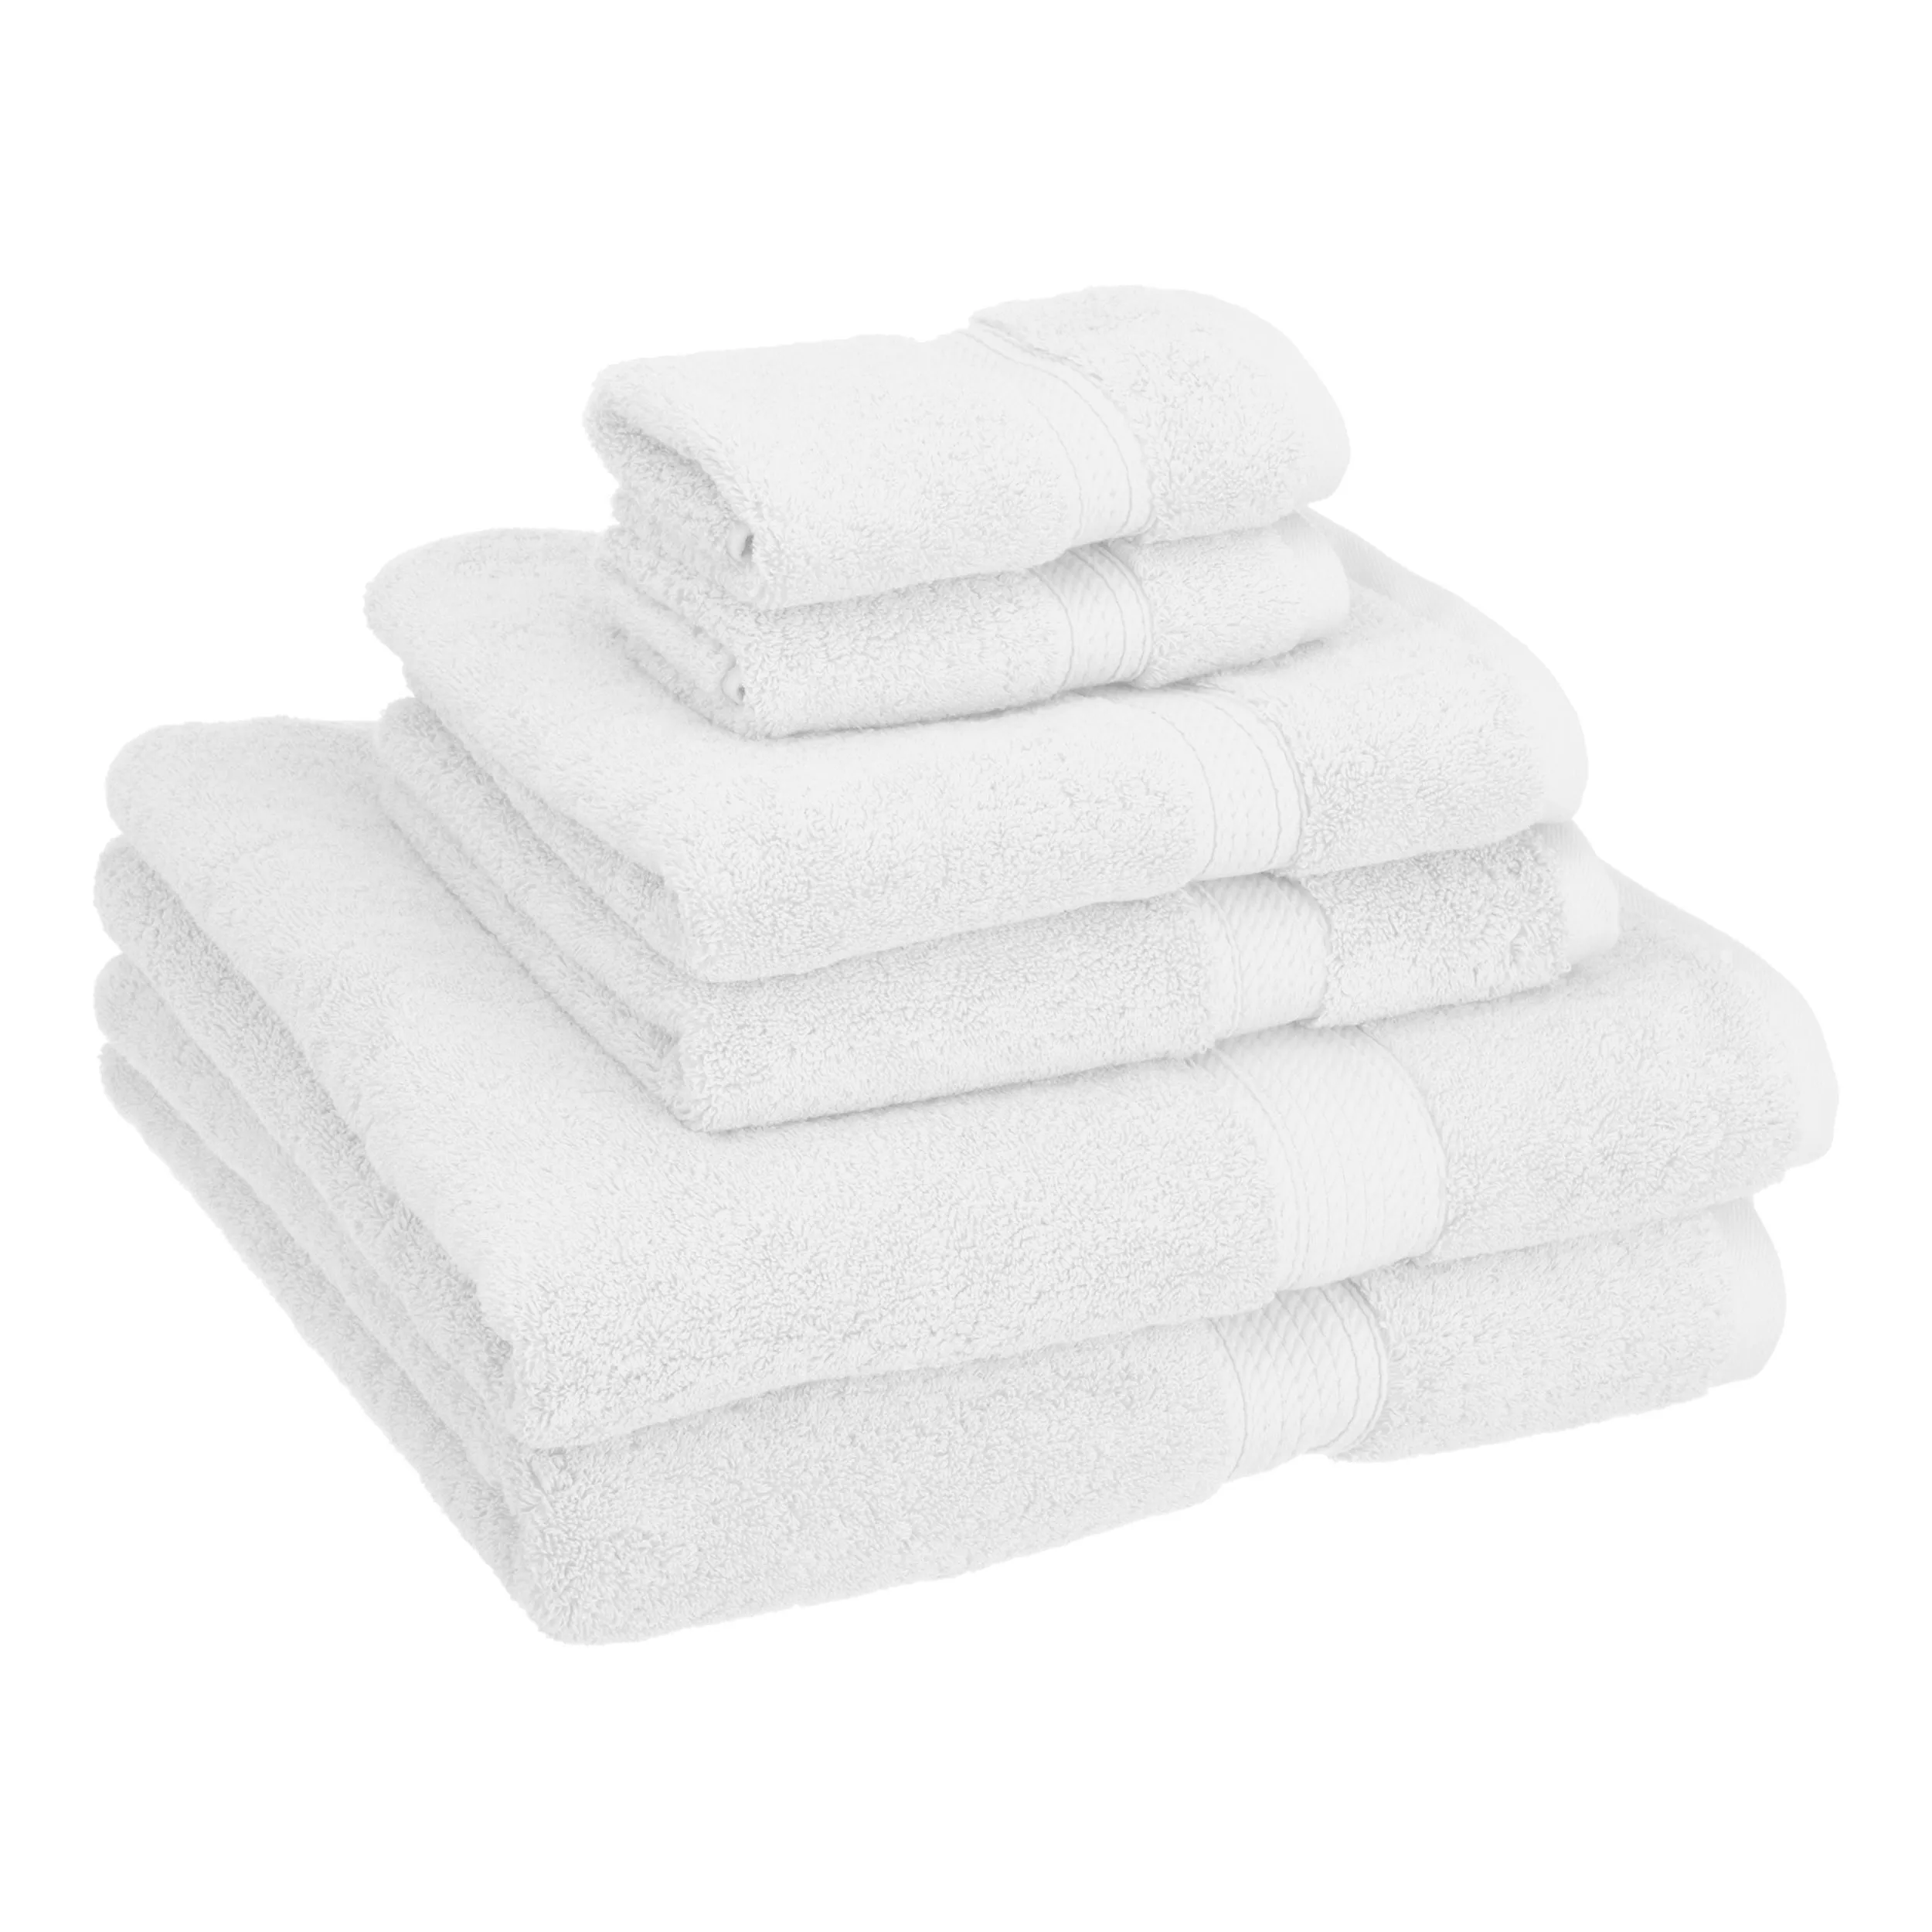 Superior Quality 900 GSM luxury bathroom 6 Piece towel set made long staple combed cotton hotel bath towel